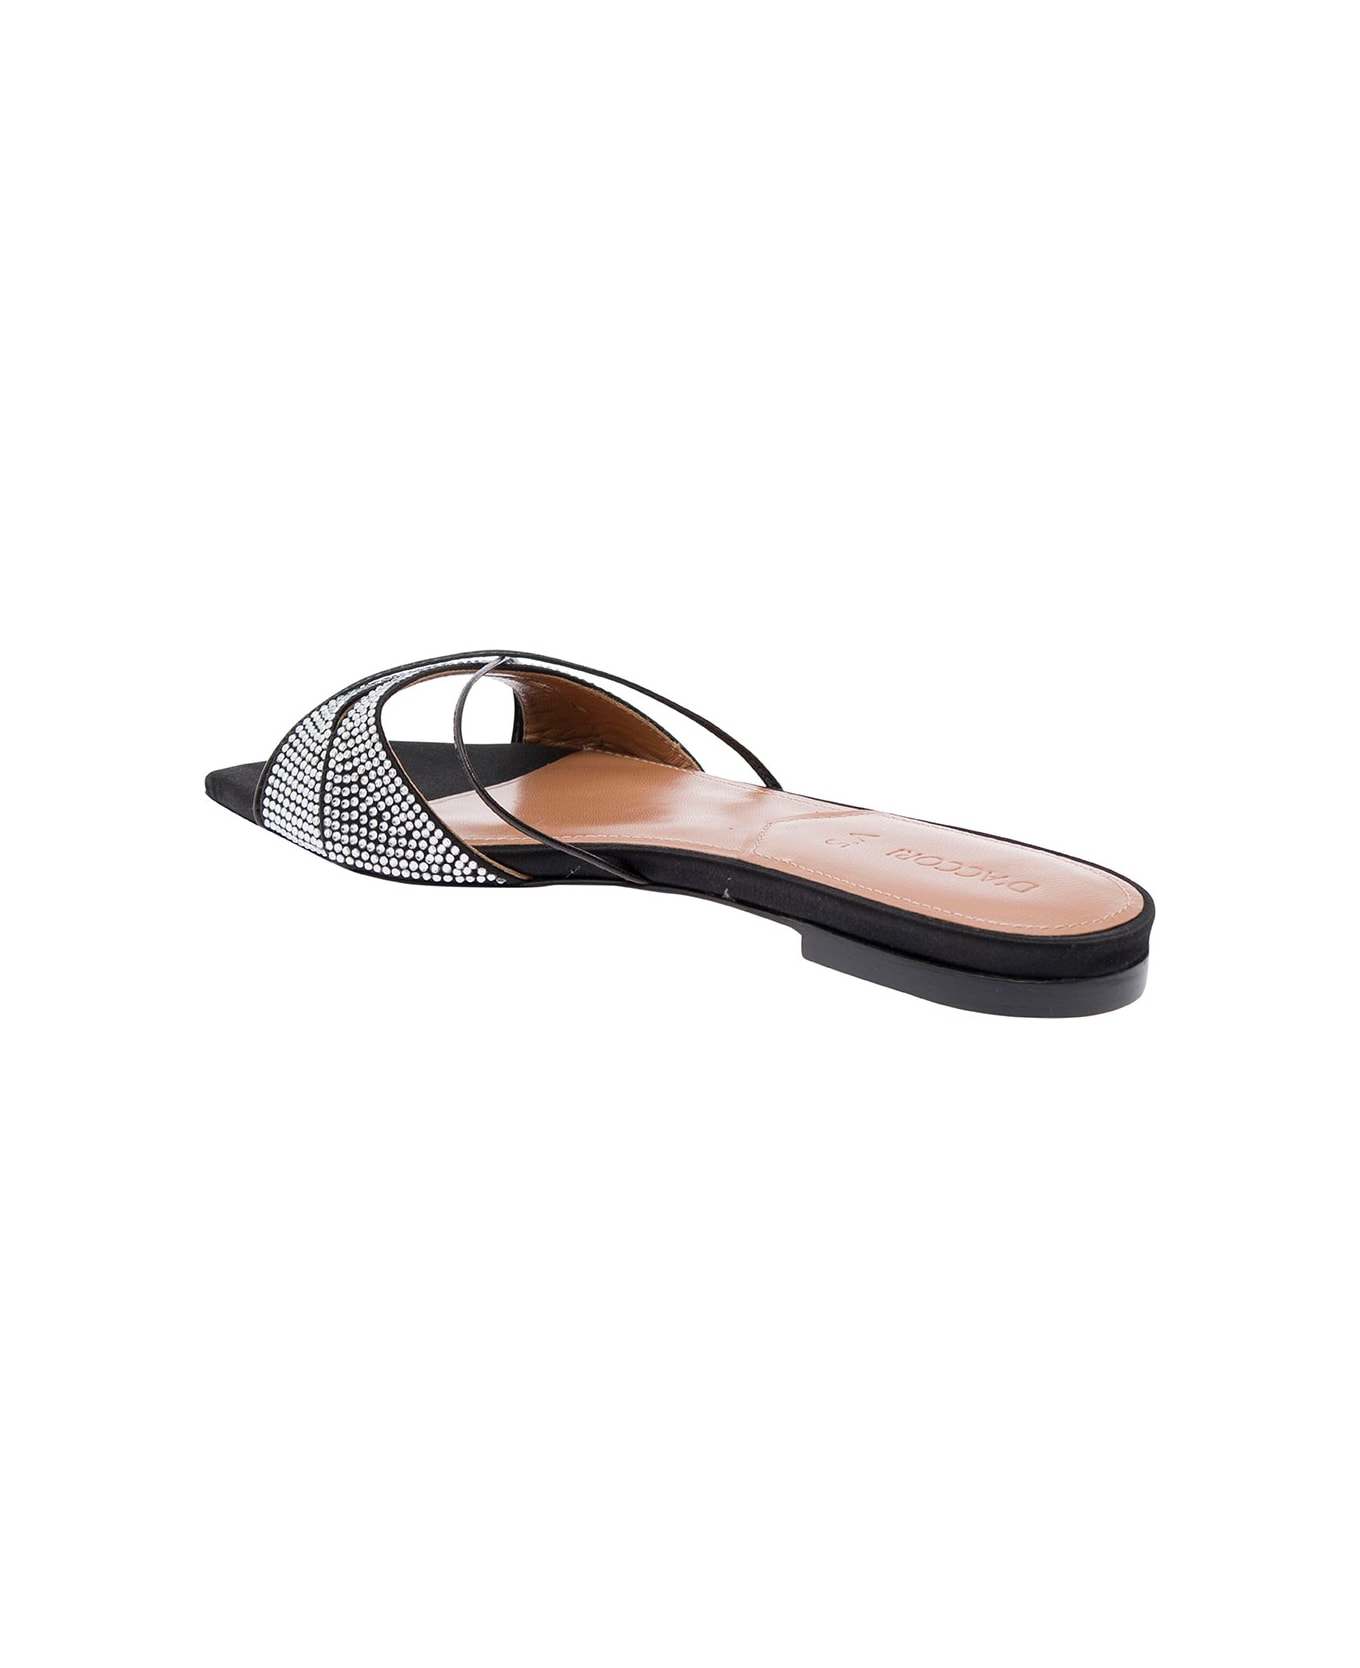 D'Accori 'lust' Black Flat Sandals With Criss-cross Straps With Rhinestone In Satin Woman - Black